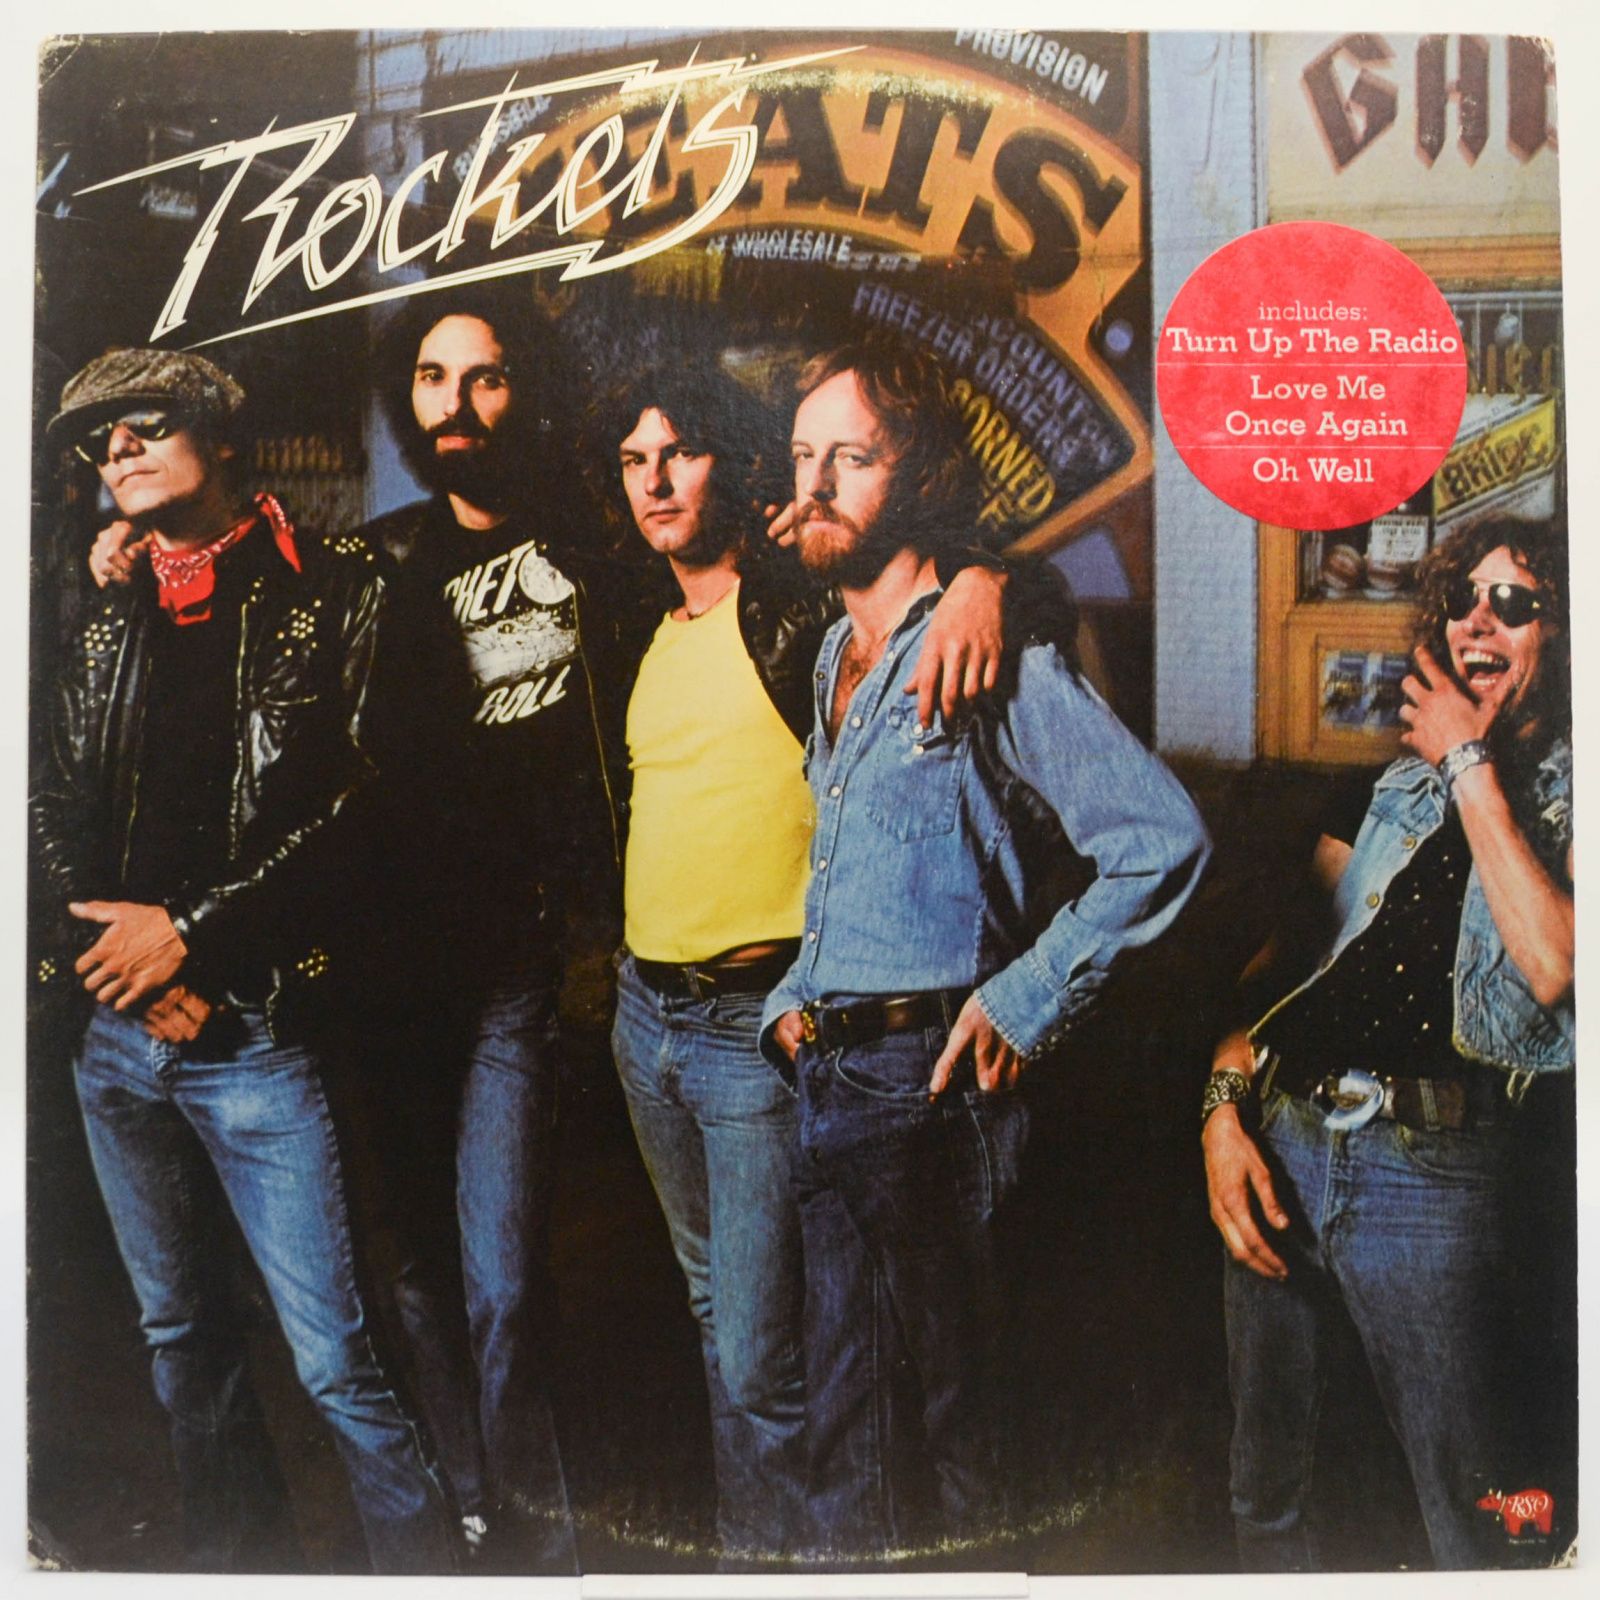 Rockets — Turn Up The Radio (USA), 1979